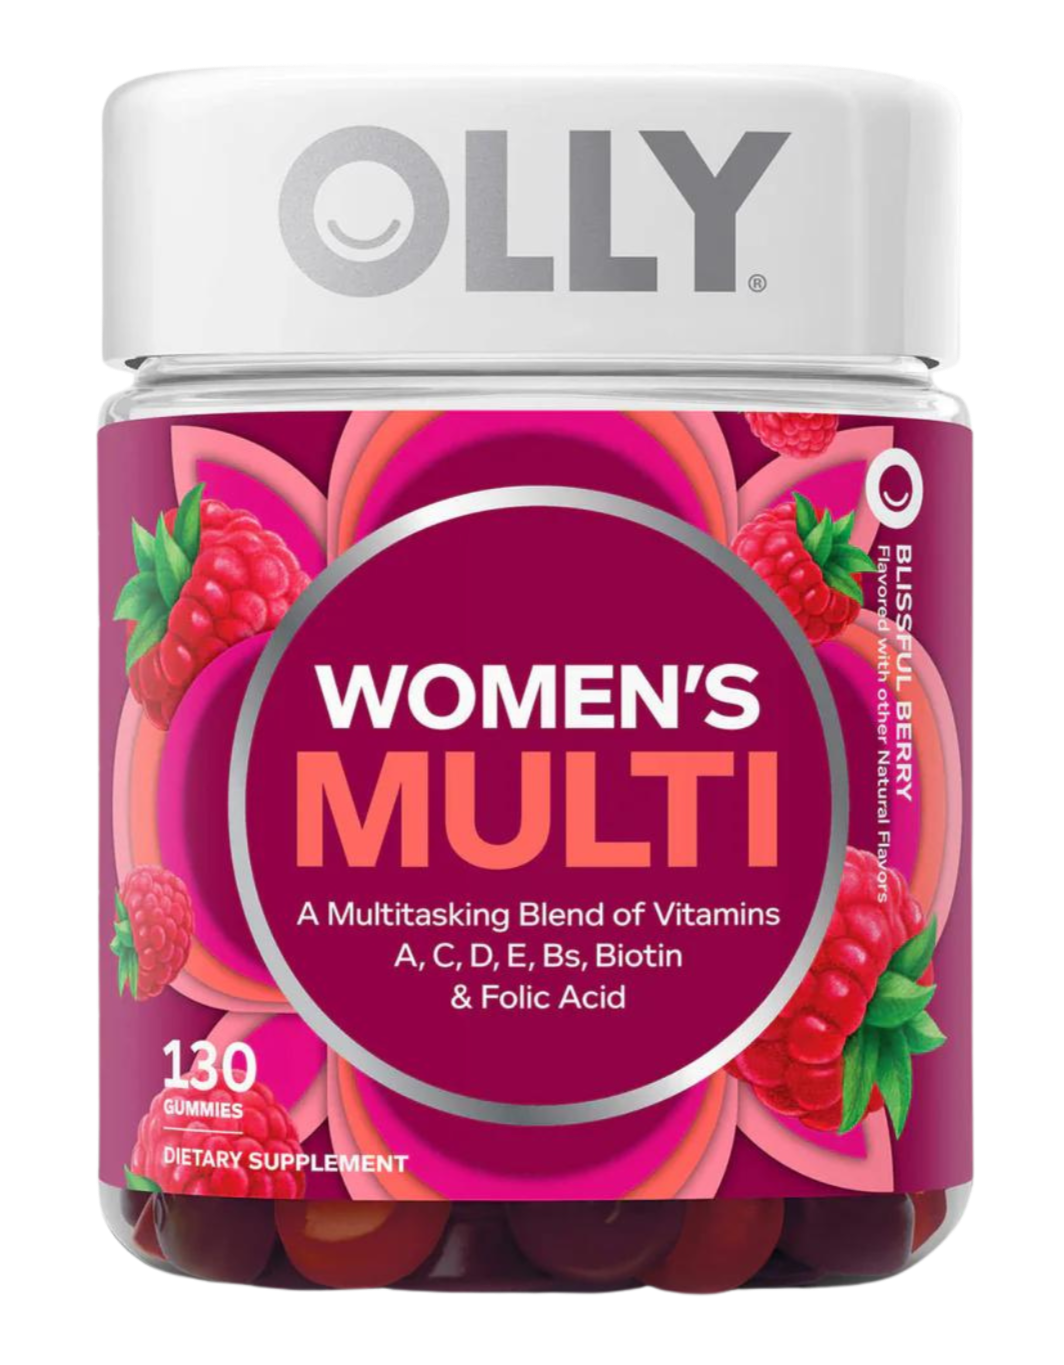 OLLY Women's Multivitamin Gummies - Berry